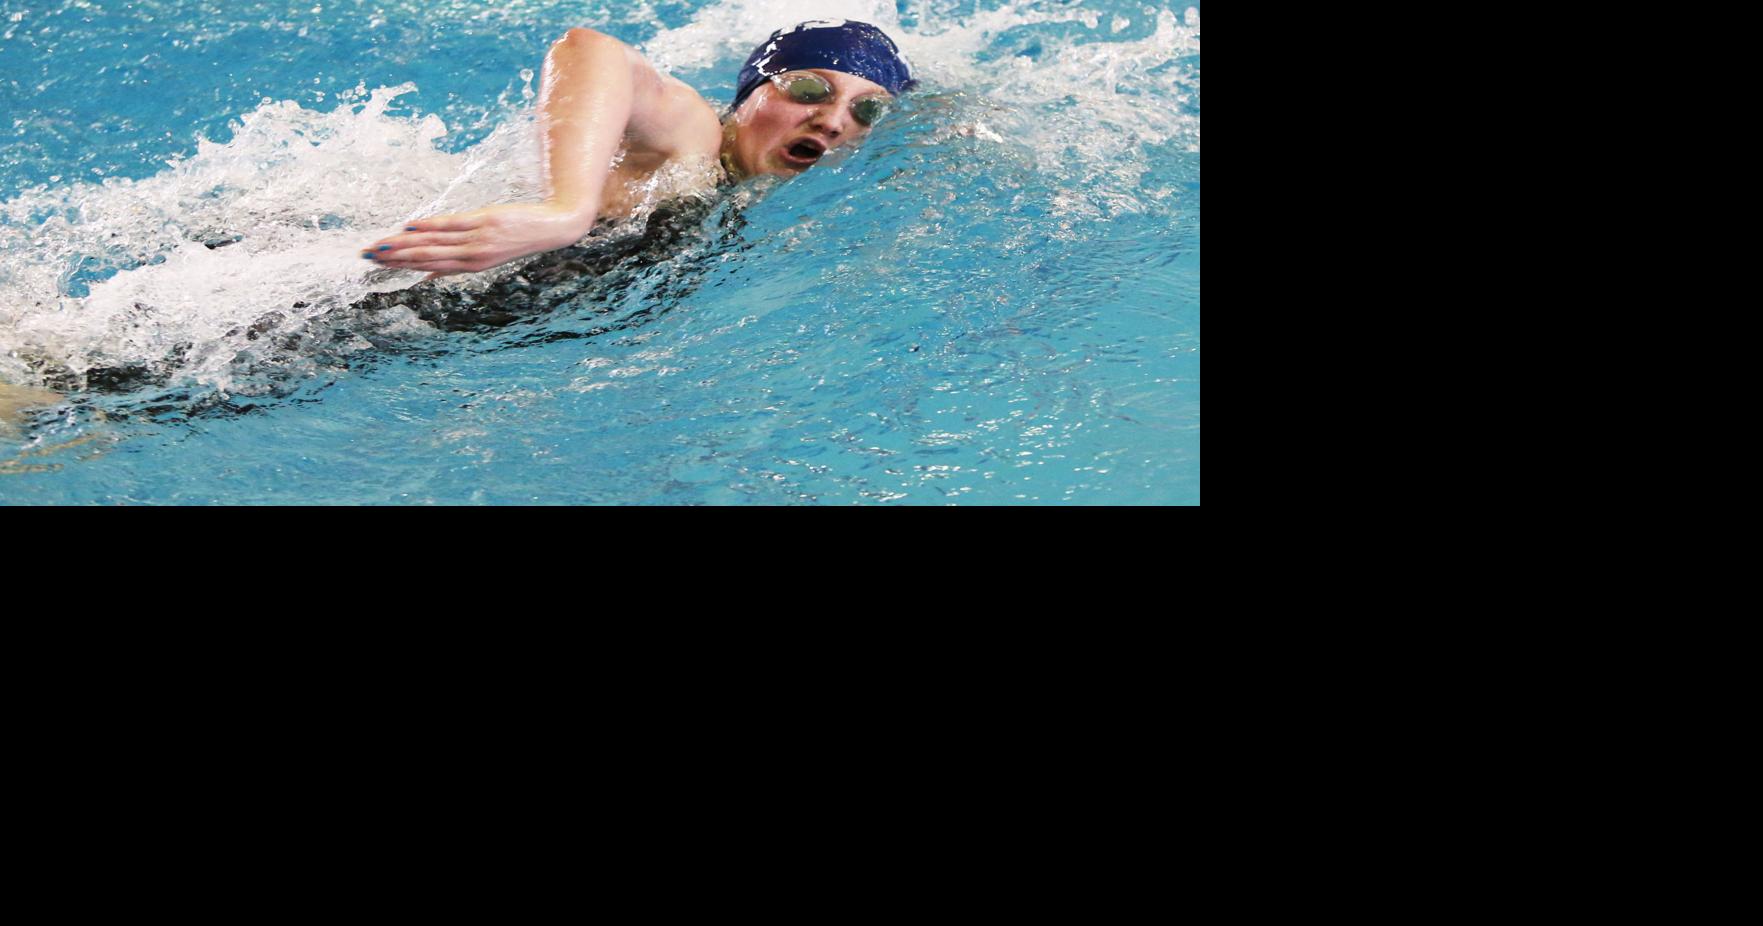 Local swimmer Morgan Miller making strides in backstrokes